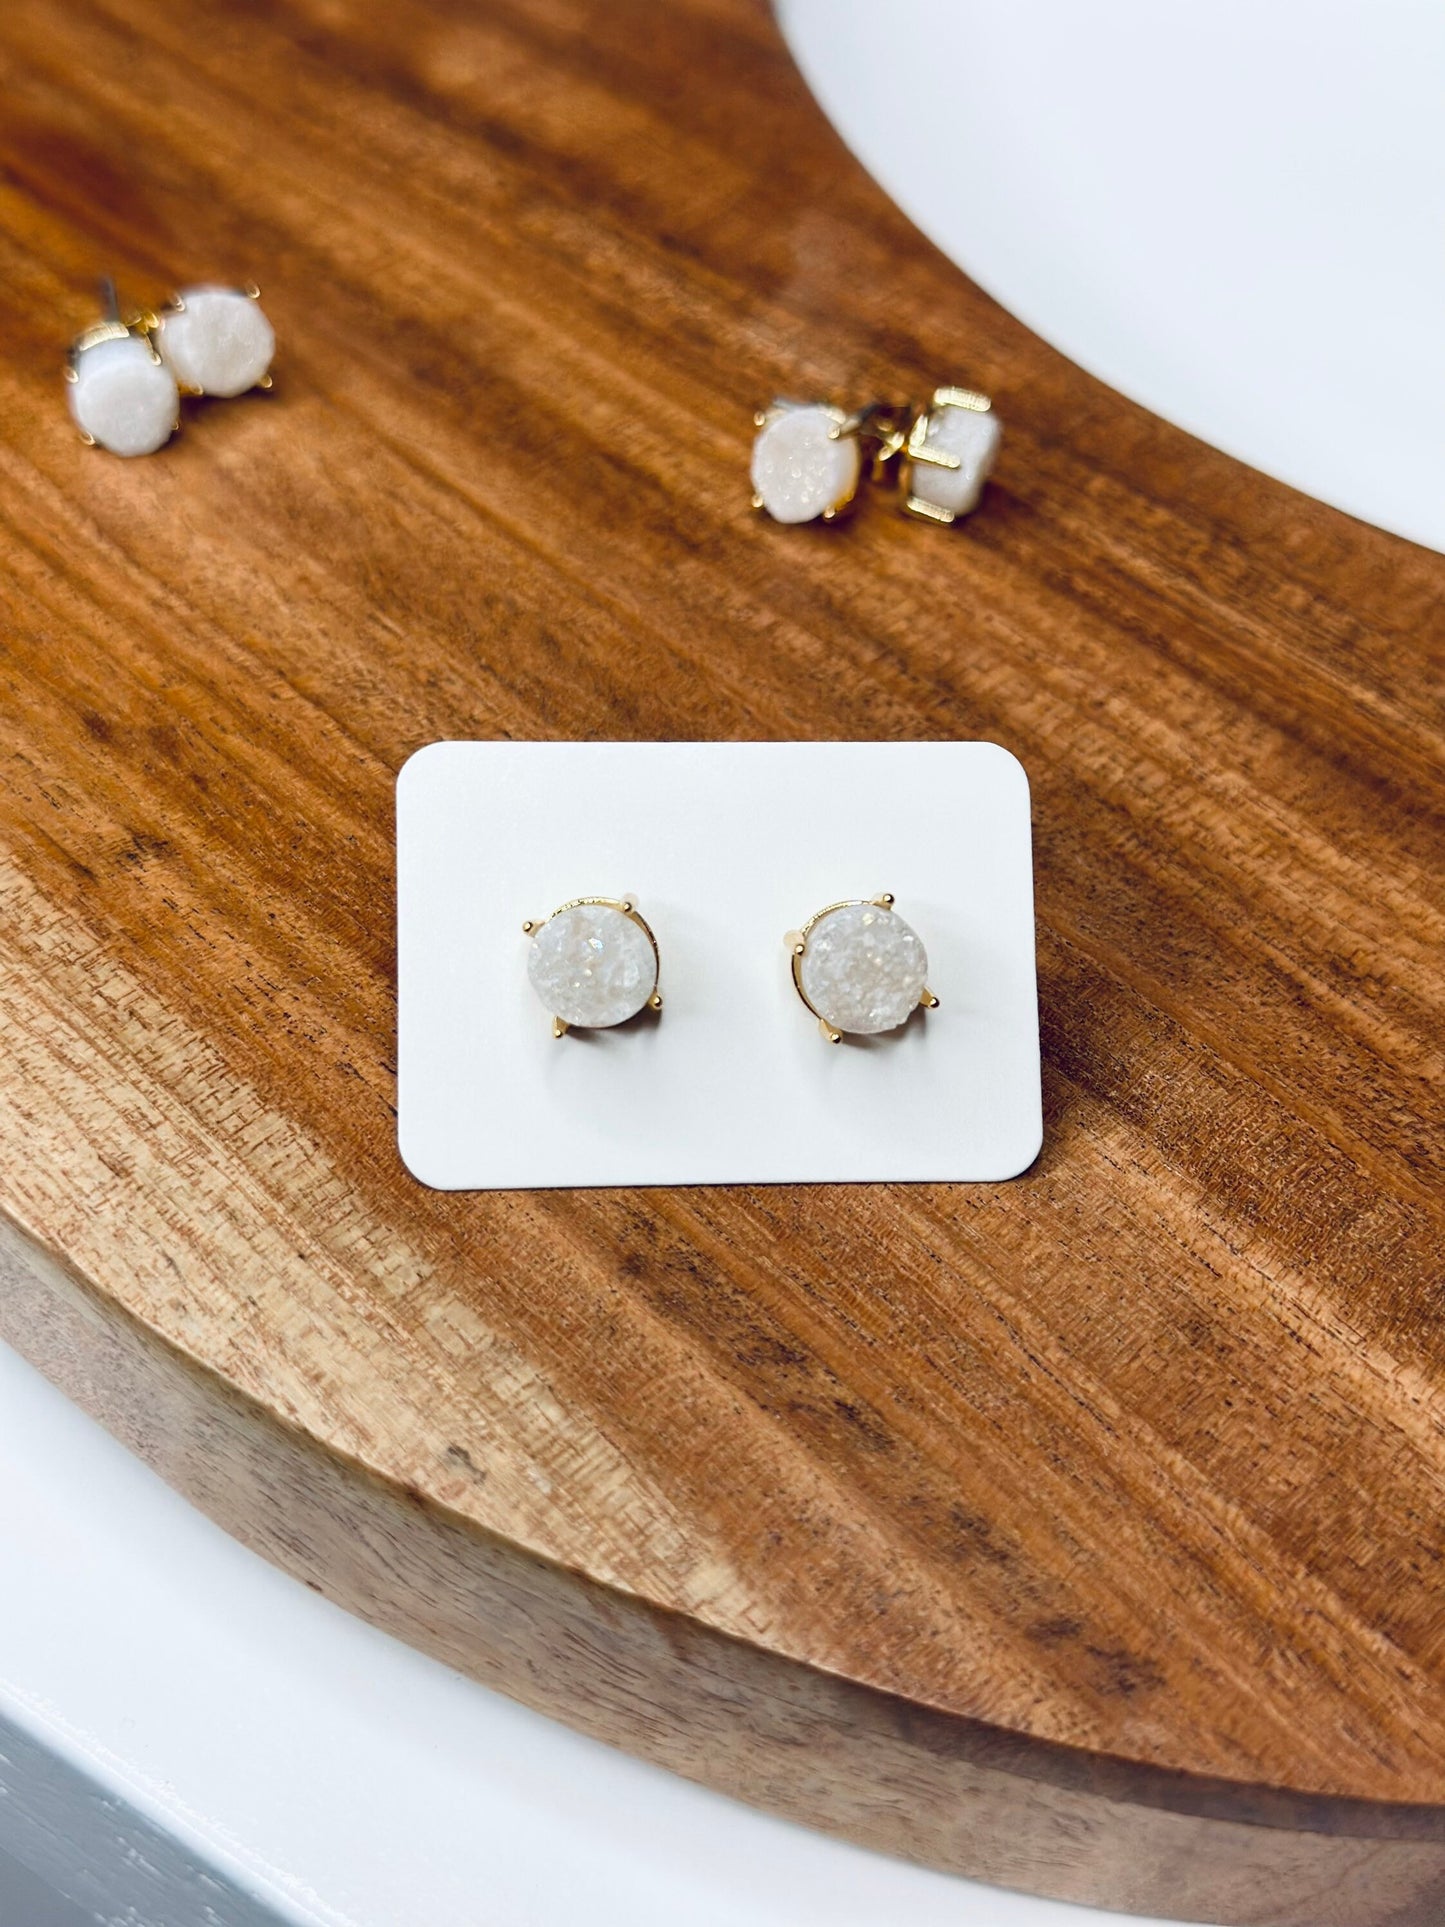 Quartz Gemstone Stud Earrings | Stainless Steel Gold Plated | Gift for her | Anniversary Gift | Birthday Gift | Crystal Earrings